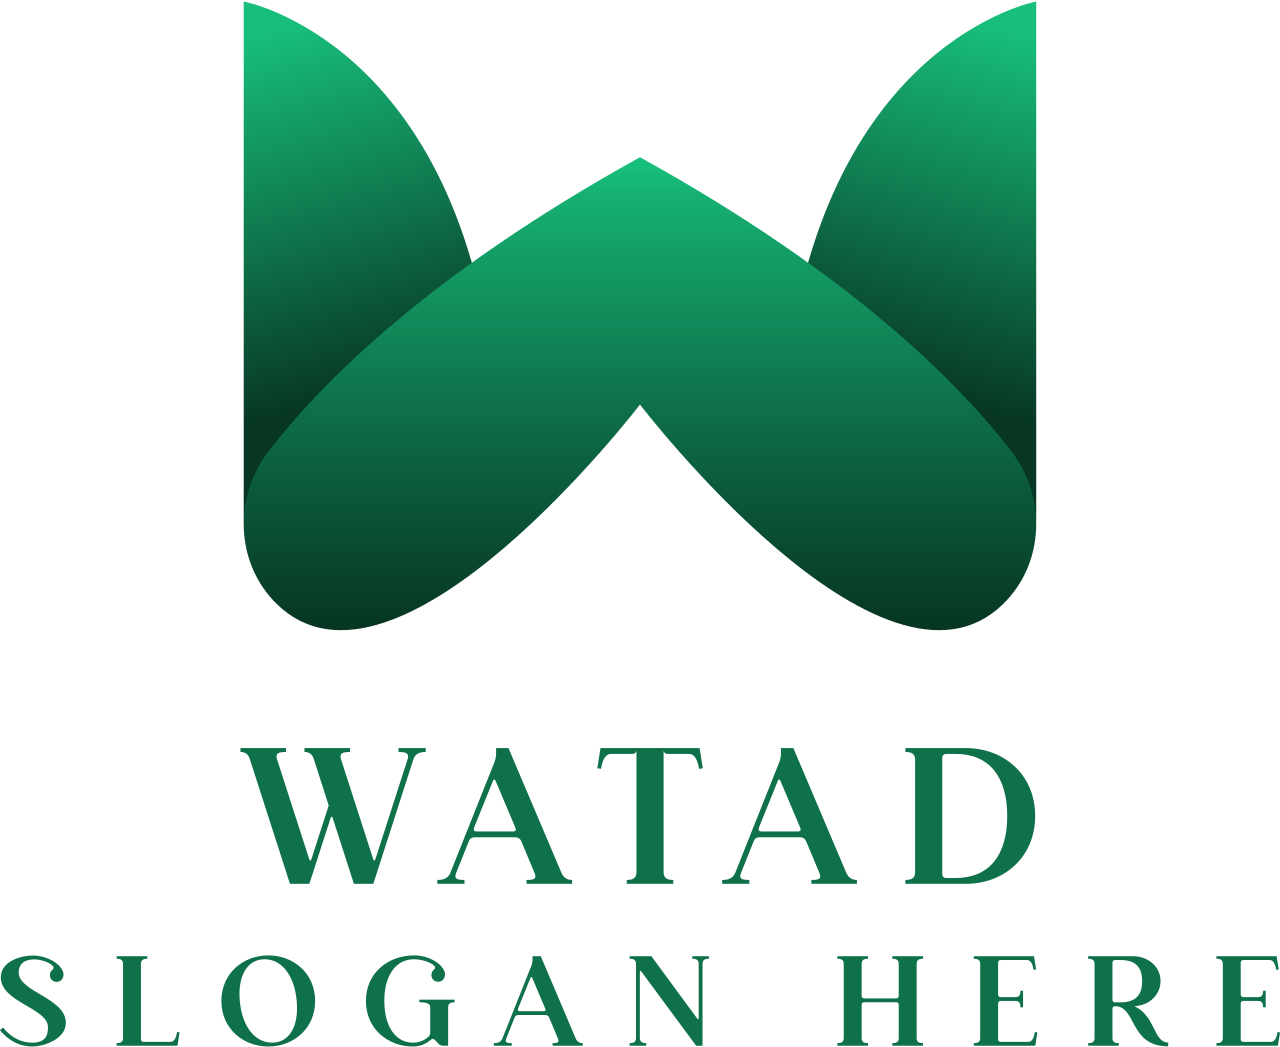 WATAD's web page